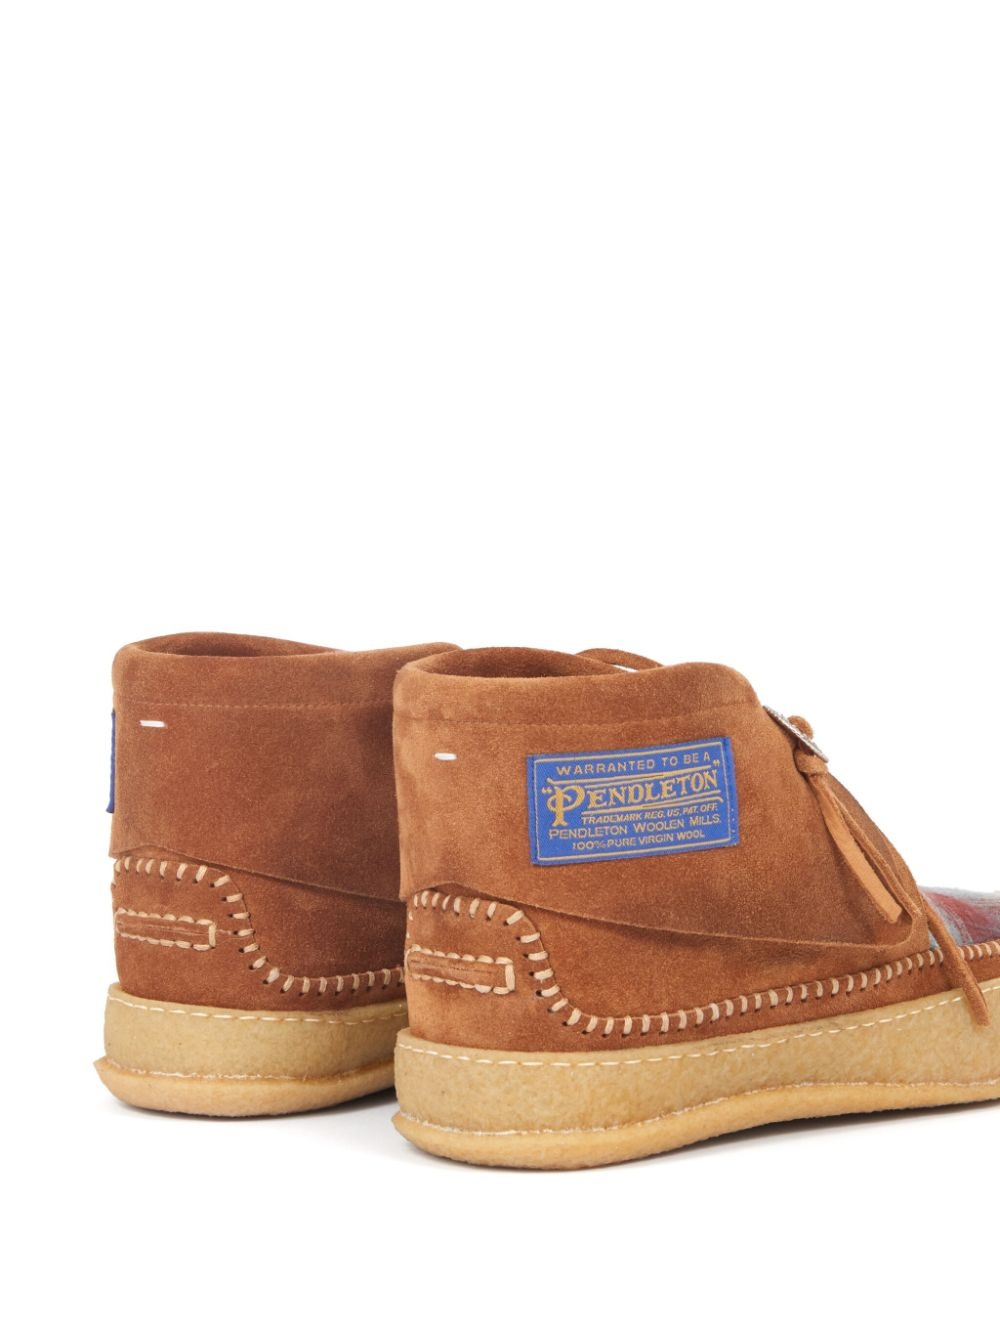 Pendleton leather boat shoes - 4